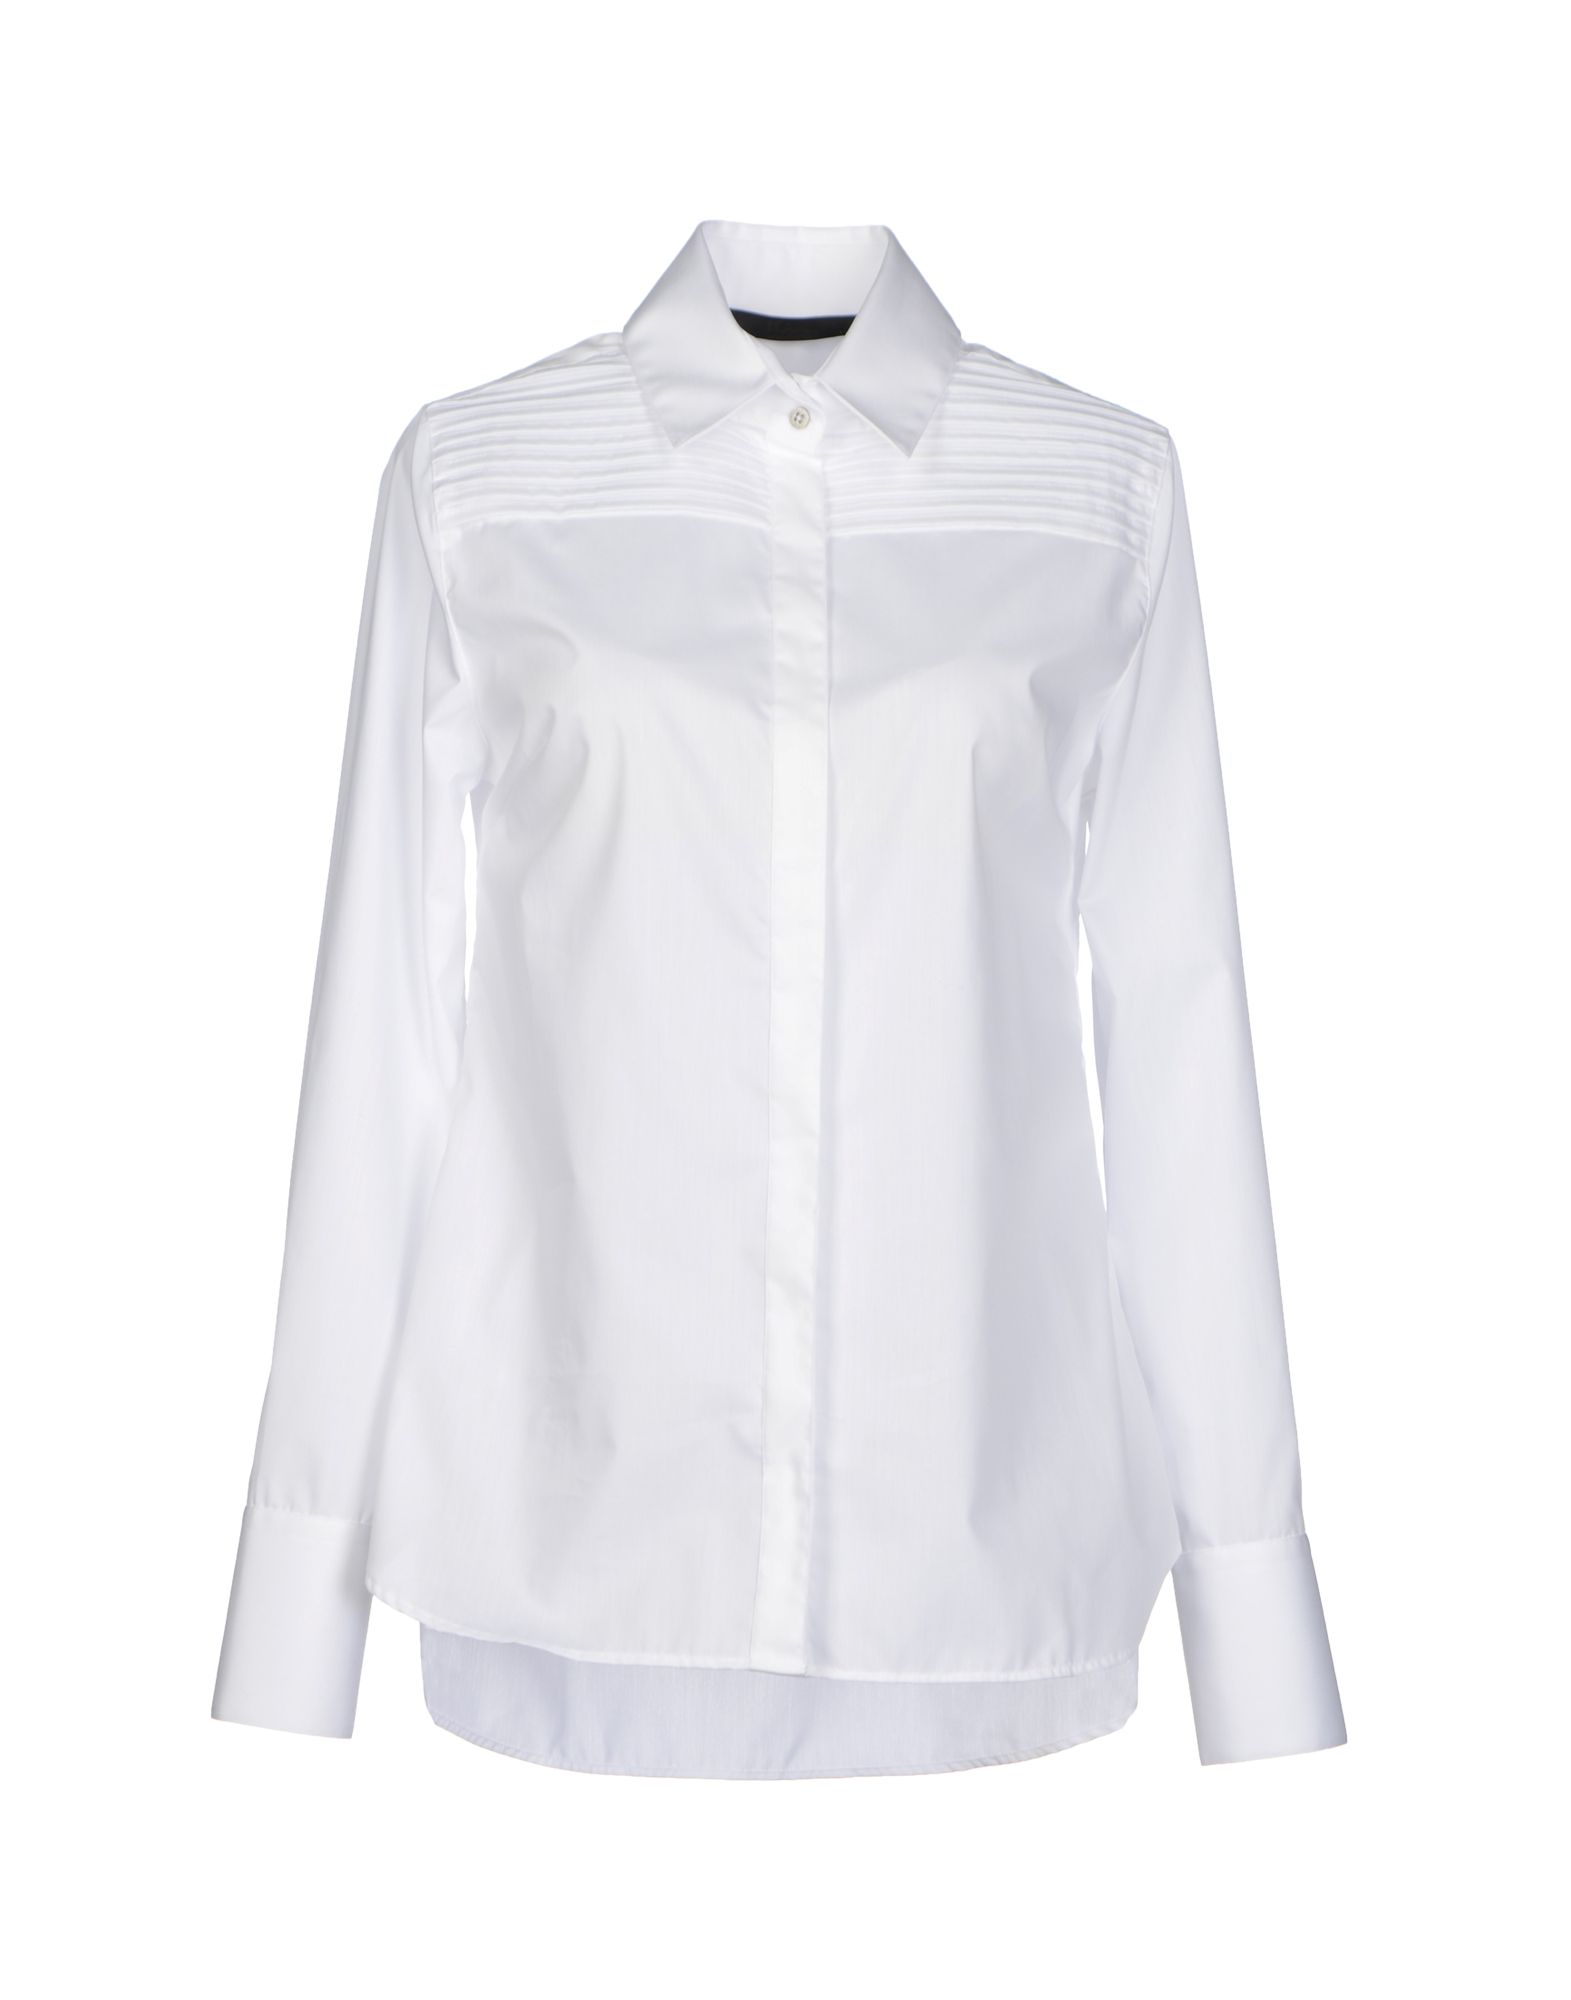 Karl lagerfeld Shirt in White | Lyst